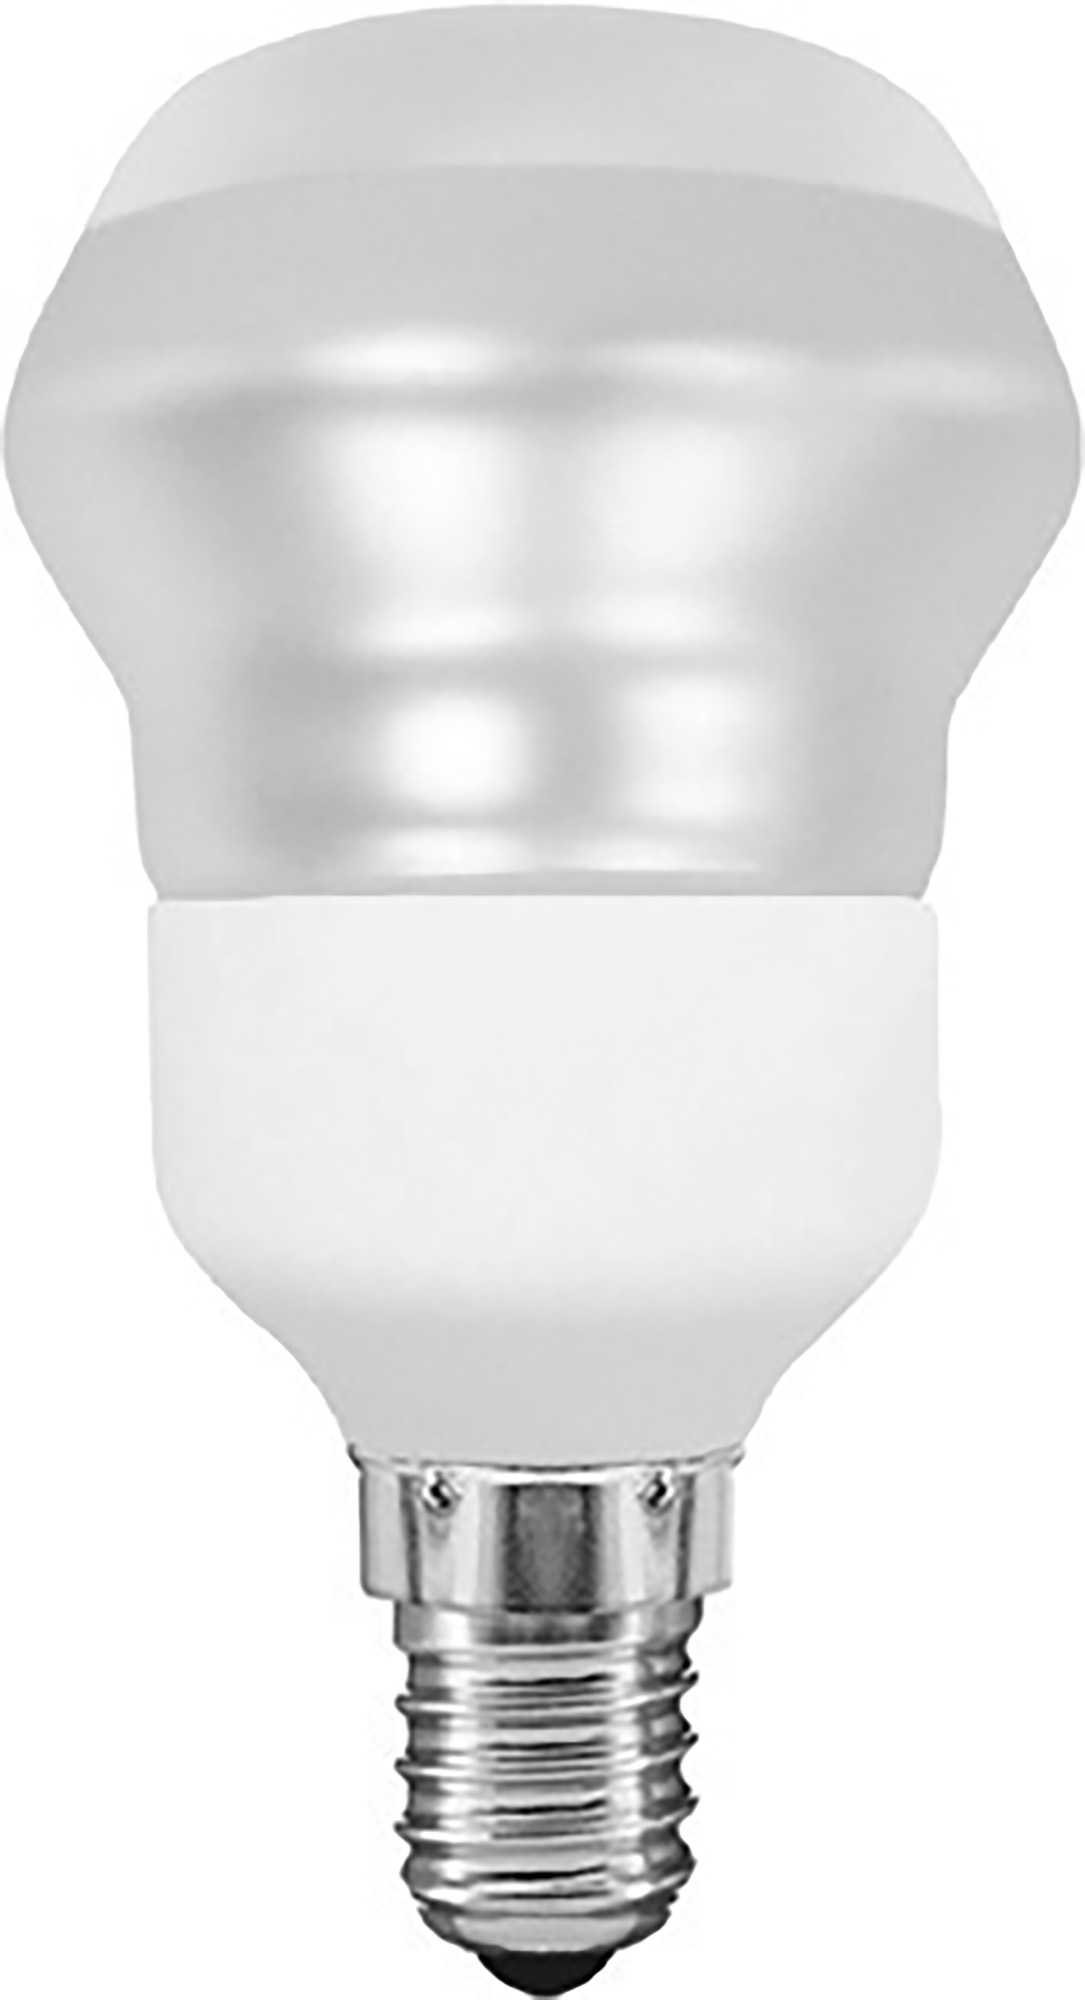 Focus Supreme Compact Fluorescent Luxram Spot Lamps